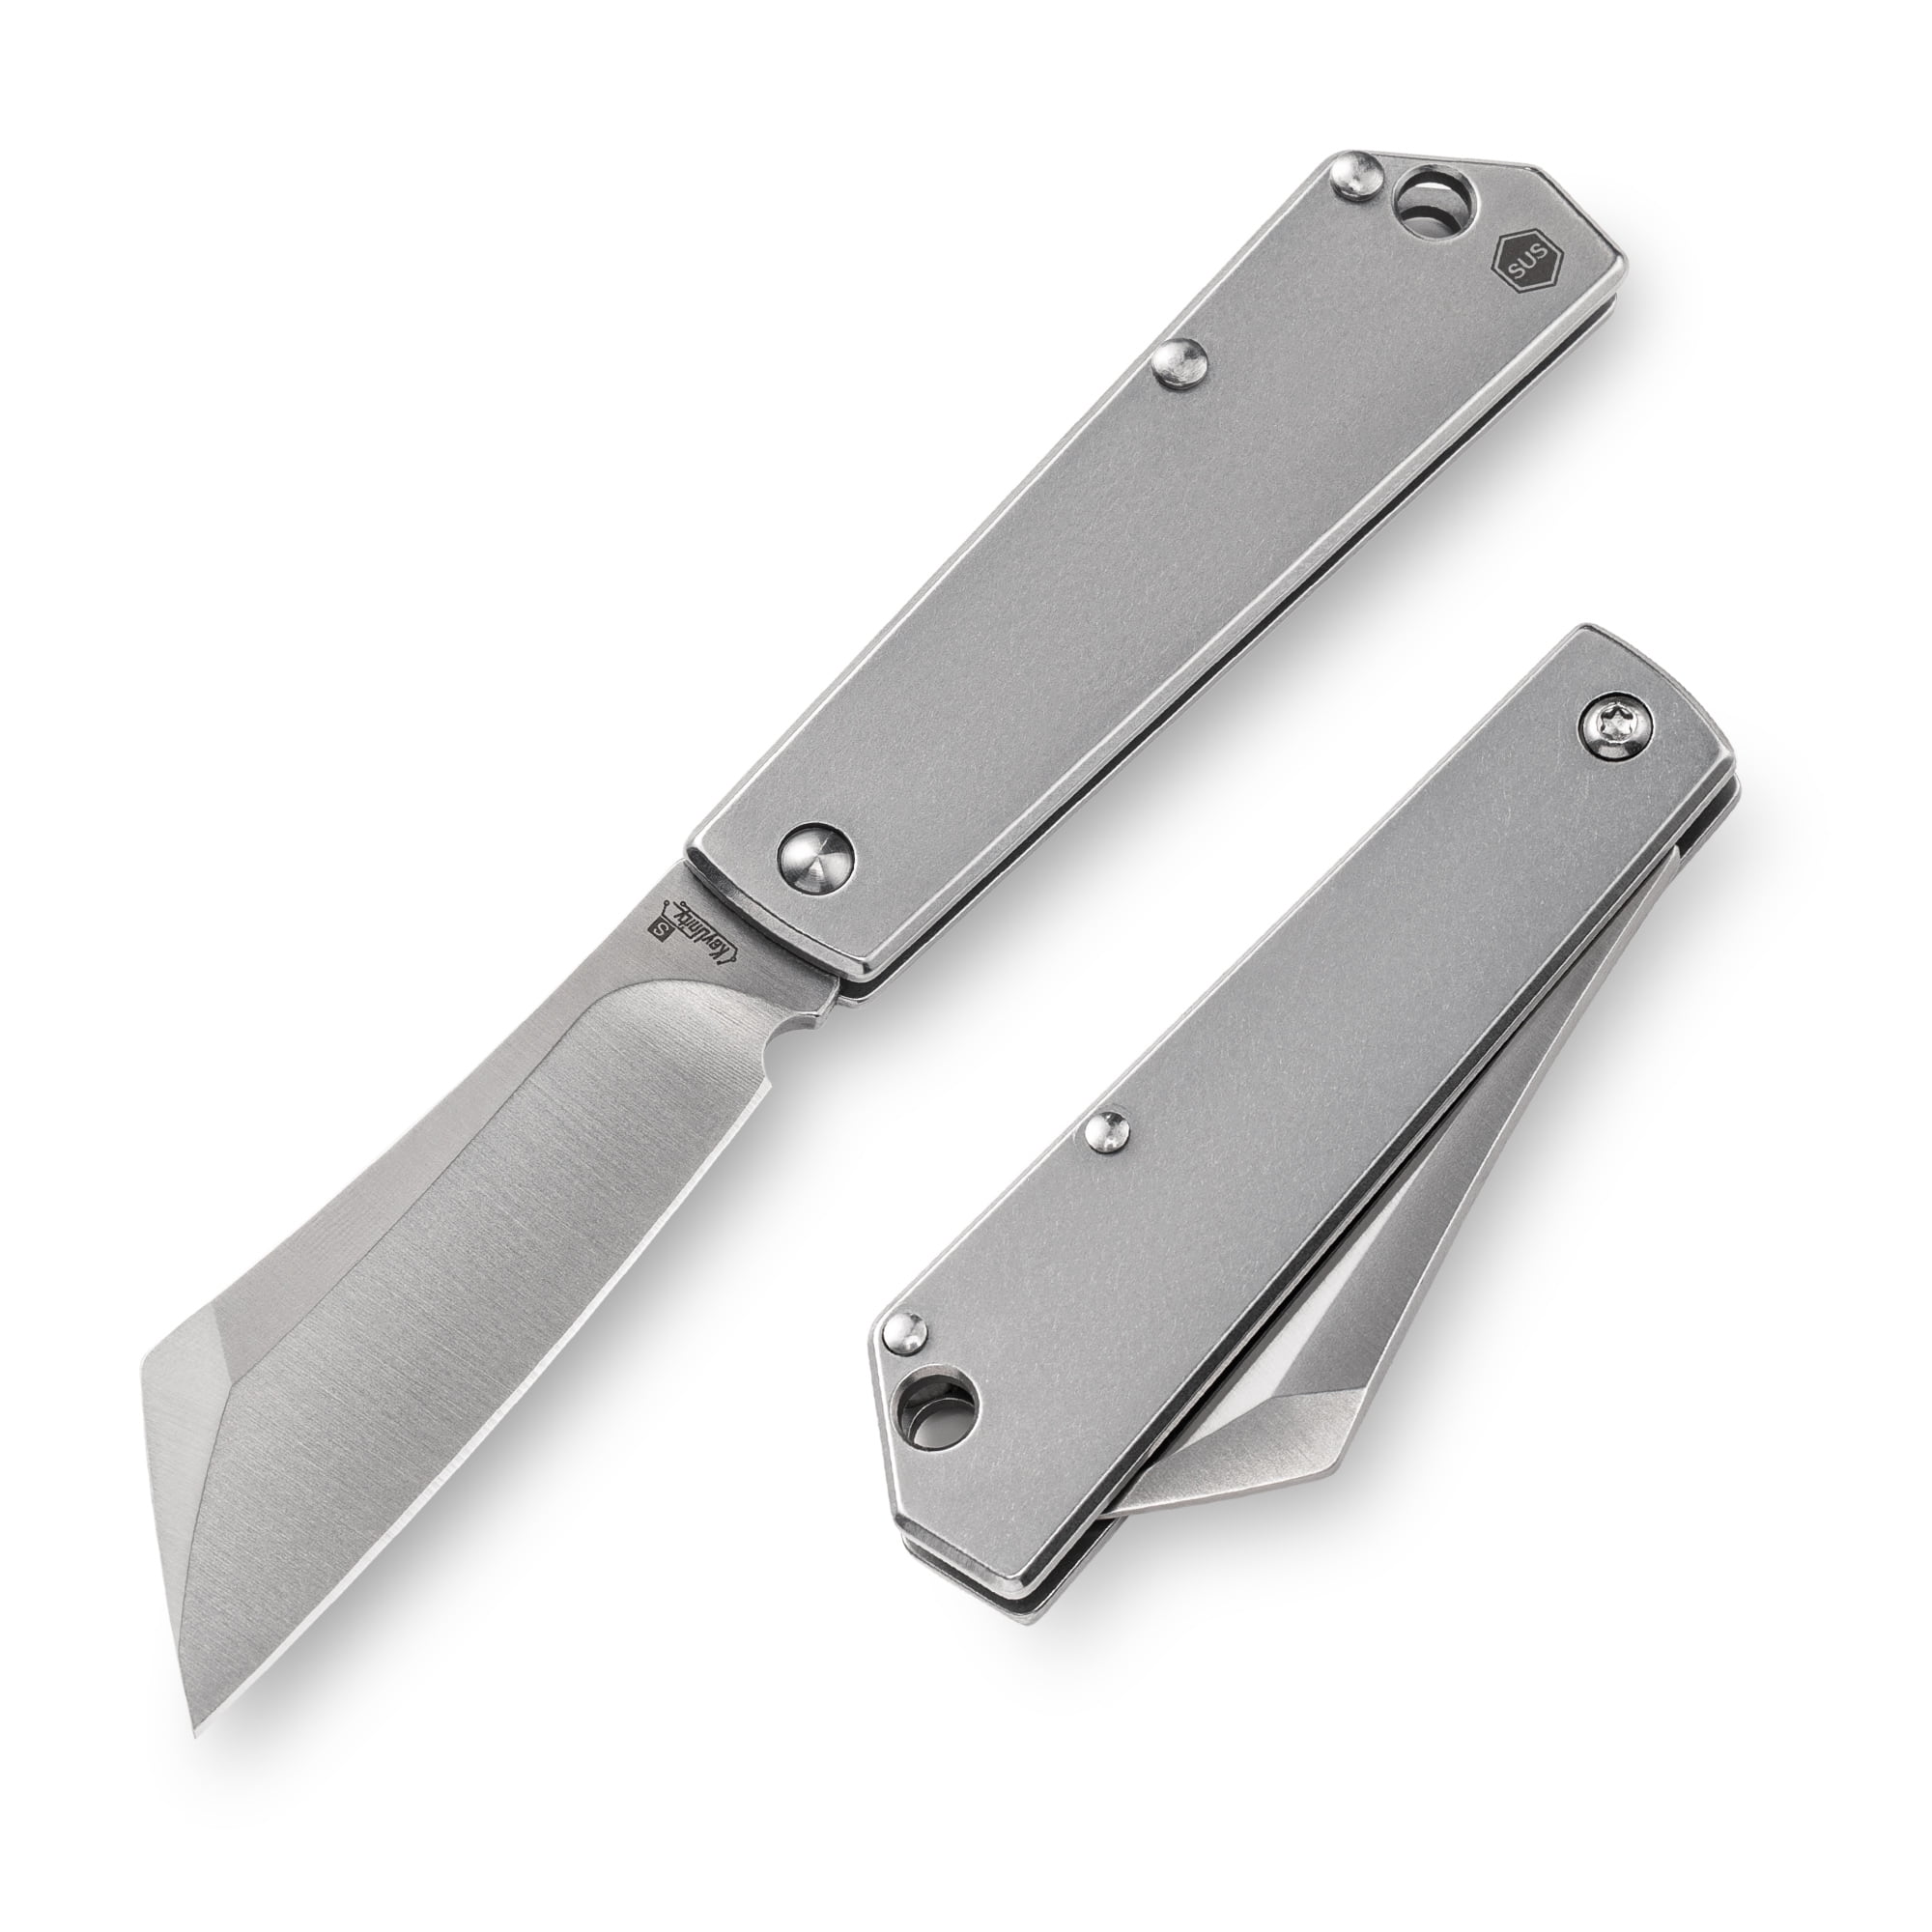 Key Unity Steel Pocket Knife for Fishing Camping, EDC Mini Folding